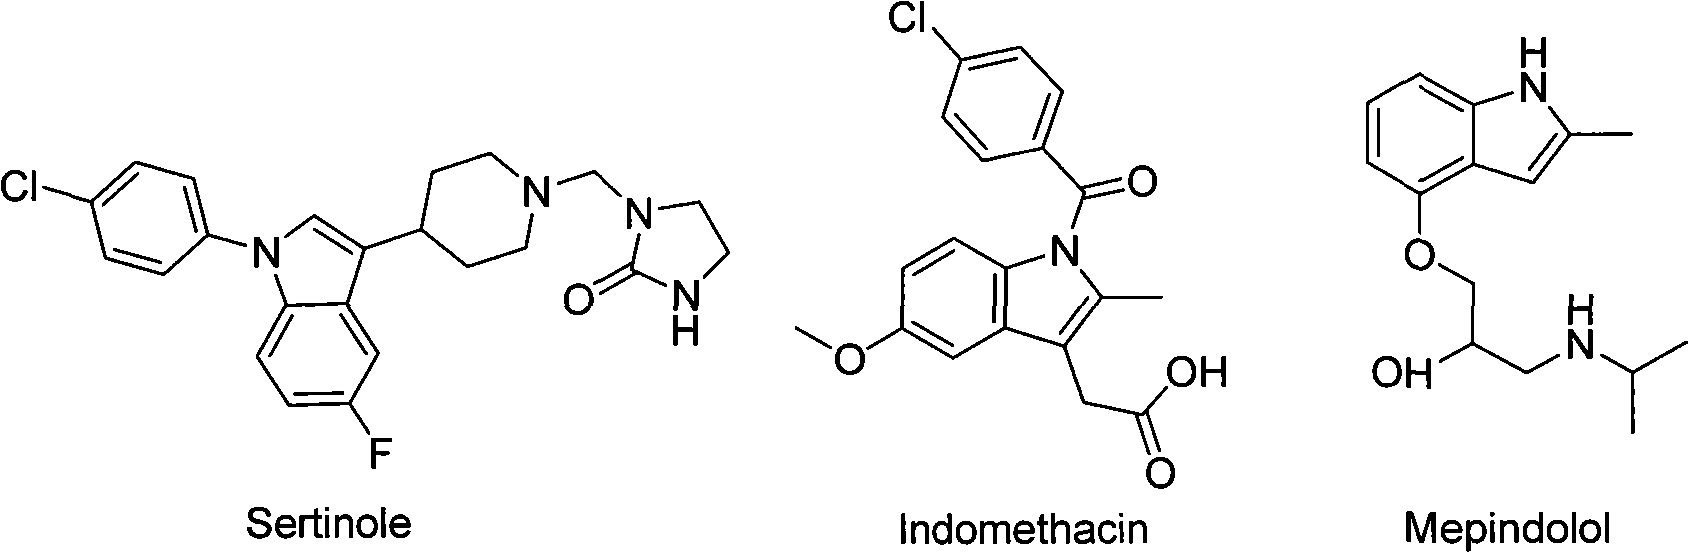 Preparation method of 2-trifluoromethyl indole derivatives